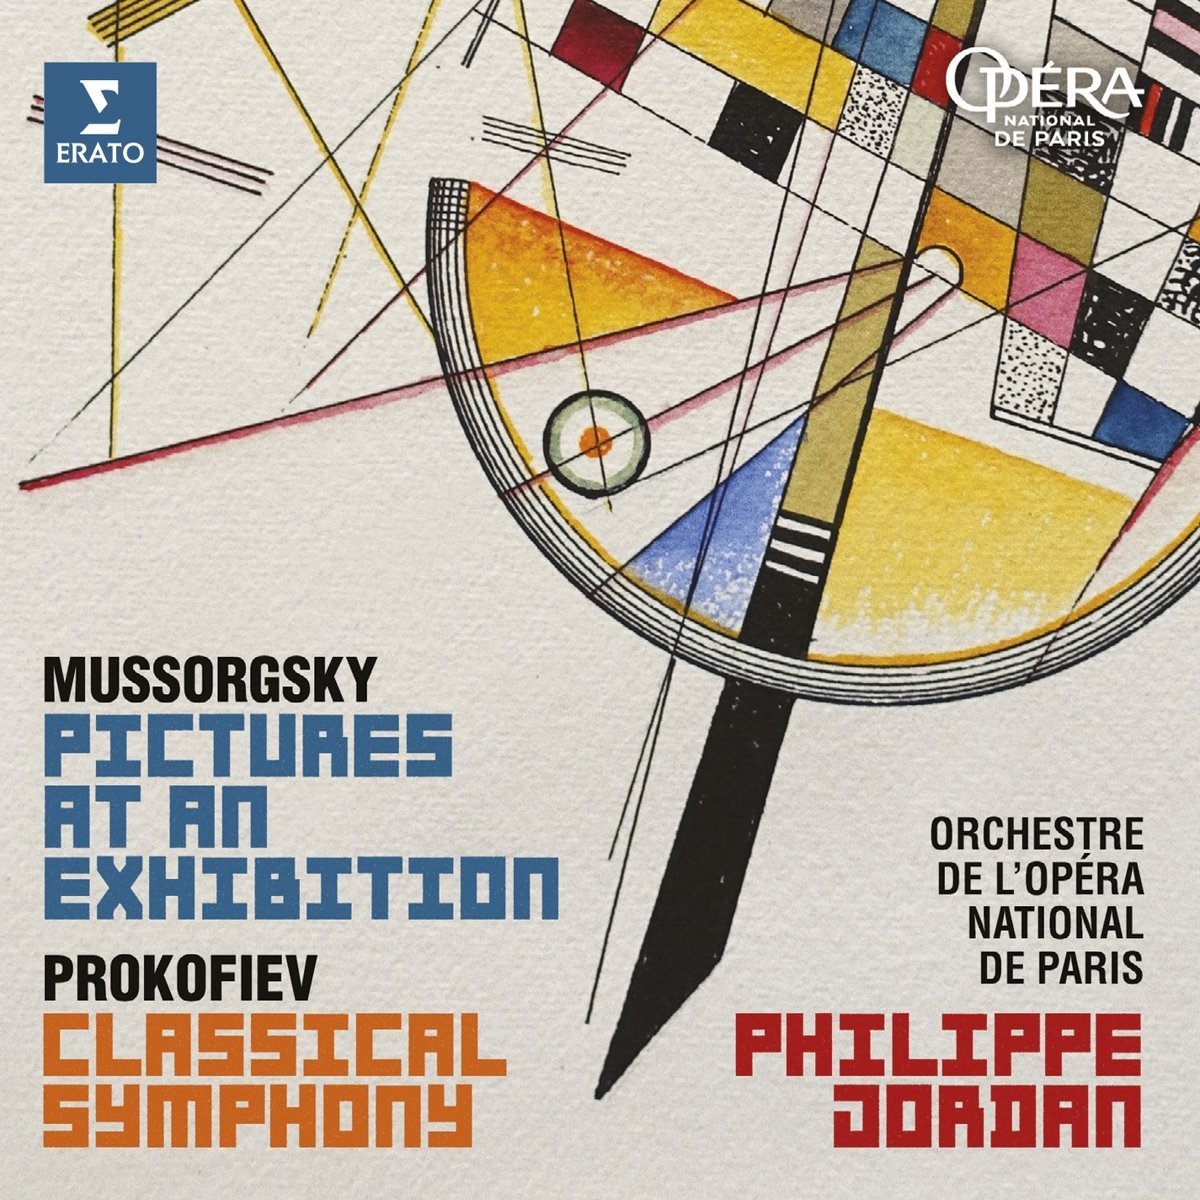 Orchestre de l’Opera National de Paris & Philippe Jordan - Mussorgsky & Prokofiev (2017) [Mora FLAC 24bit/96kHz]